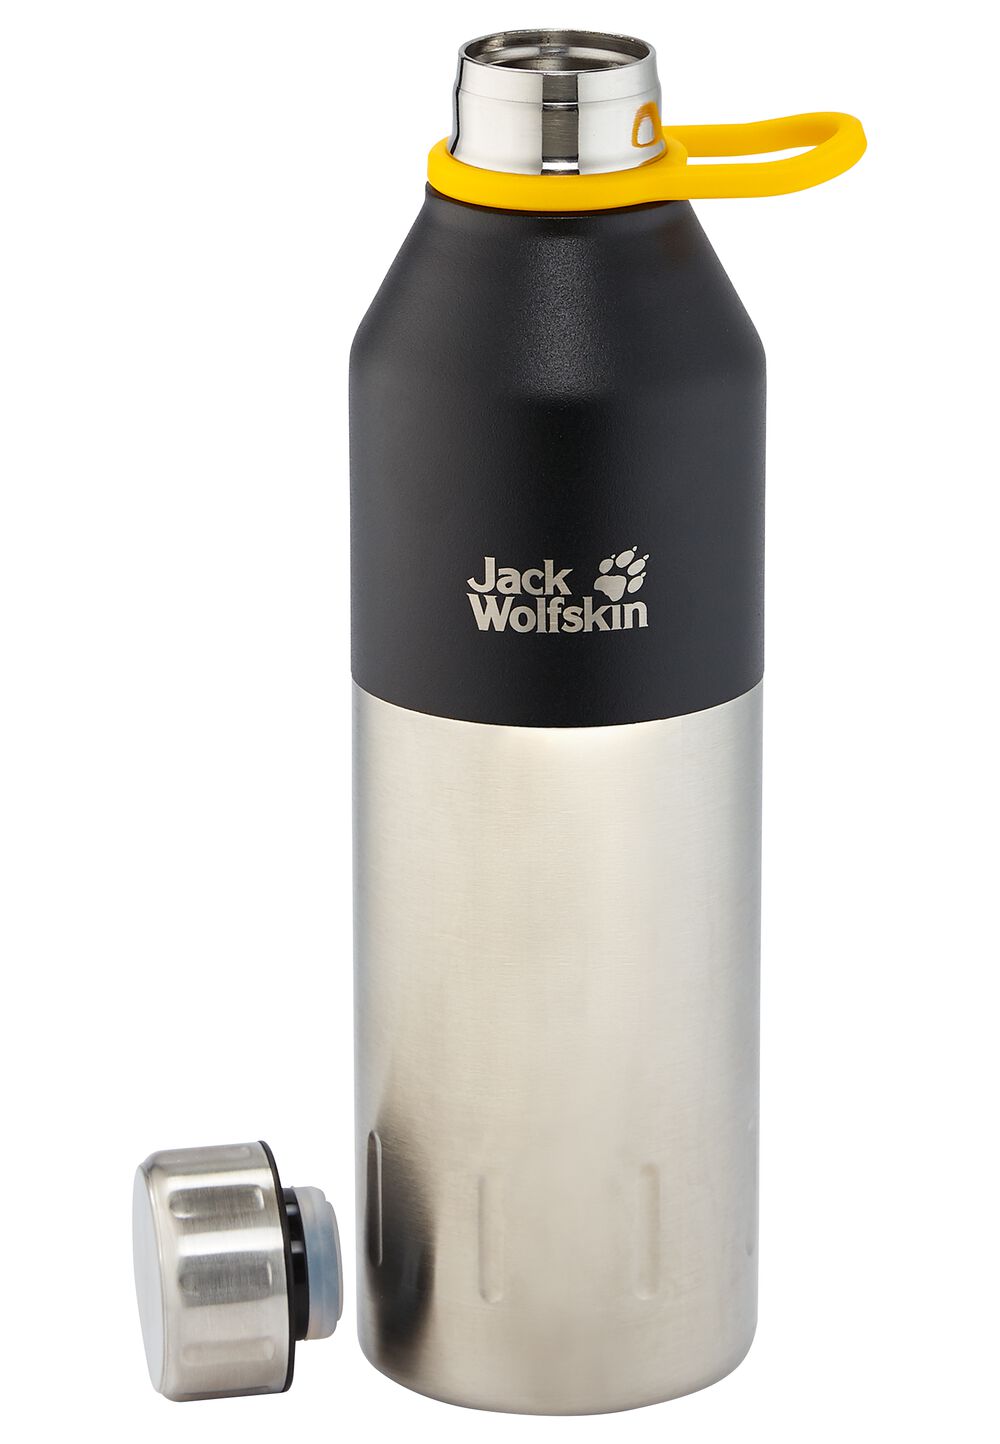 Image of Jack Wolfskin Thermosflasche Kole 0.5 one size schwarz black